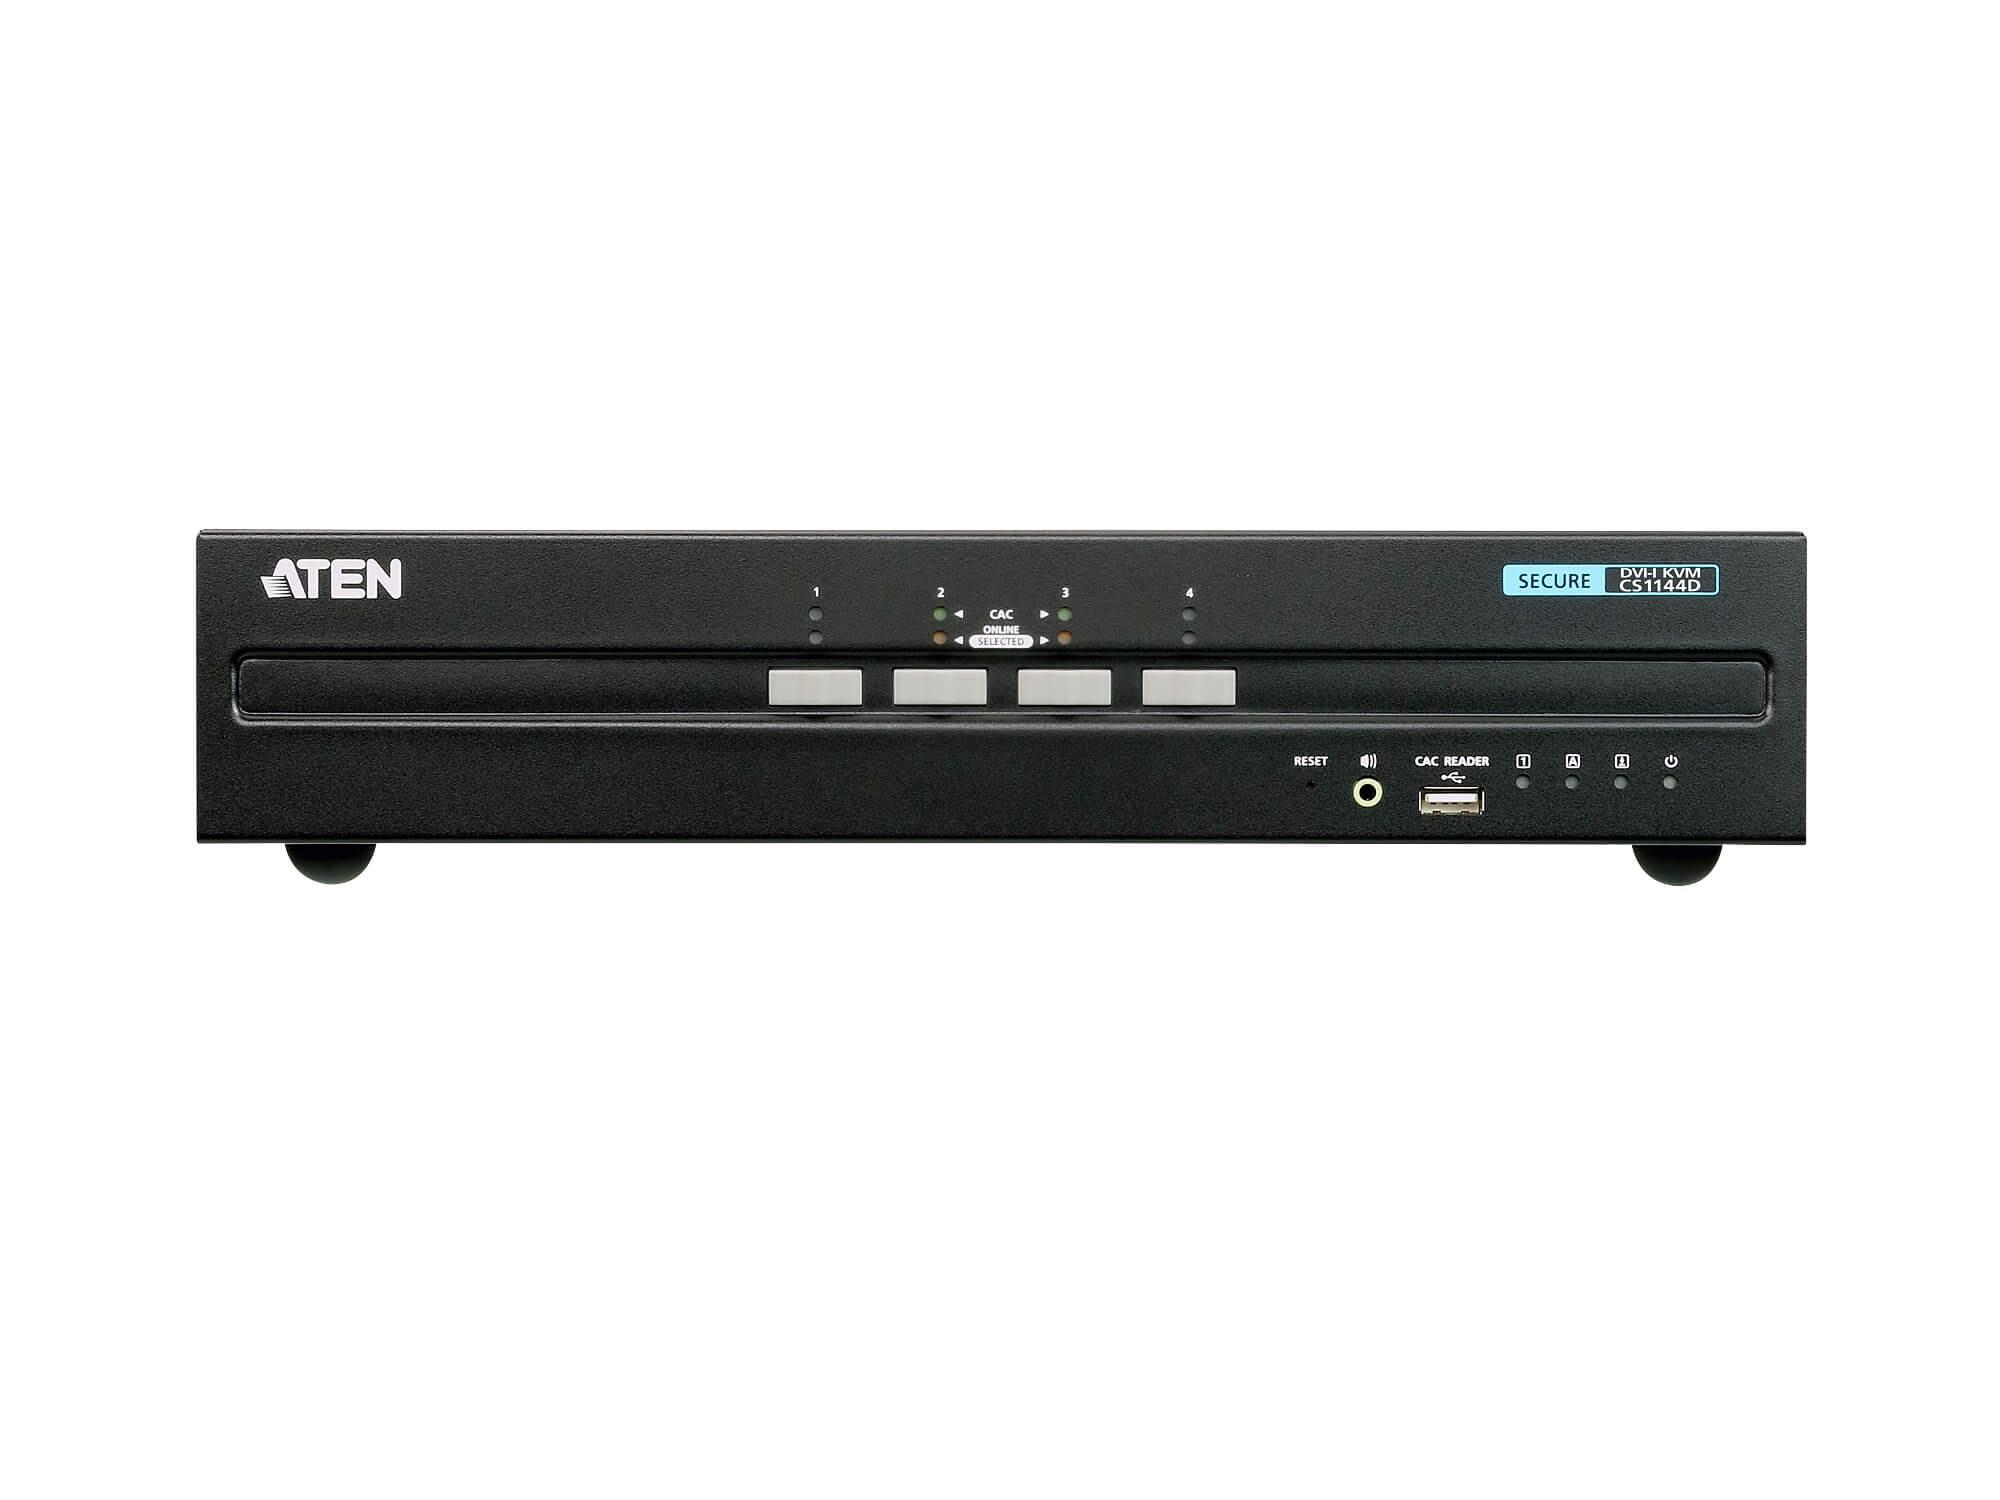 CS1144D 4-Port USB DVI Dual Display Secure KVM Switch (PSS PP v3.0 Compliant) by Aten